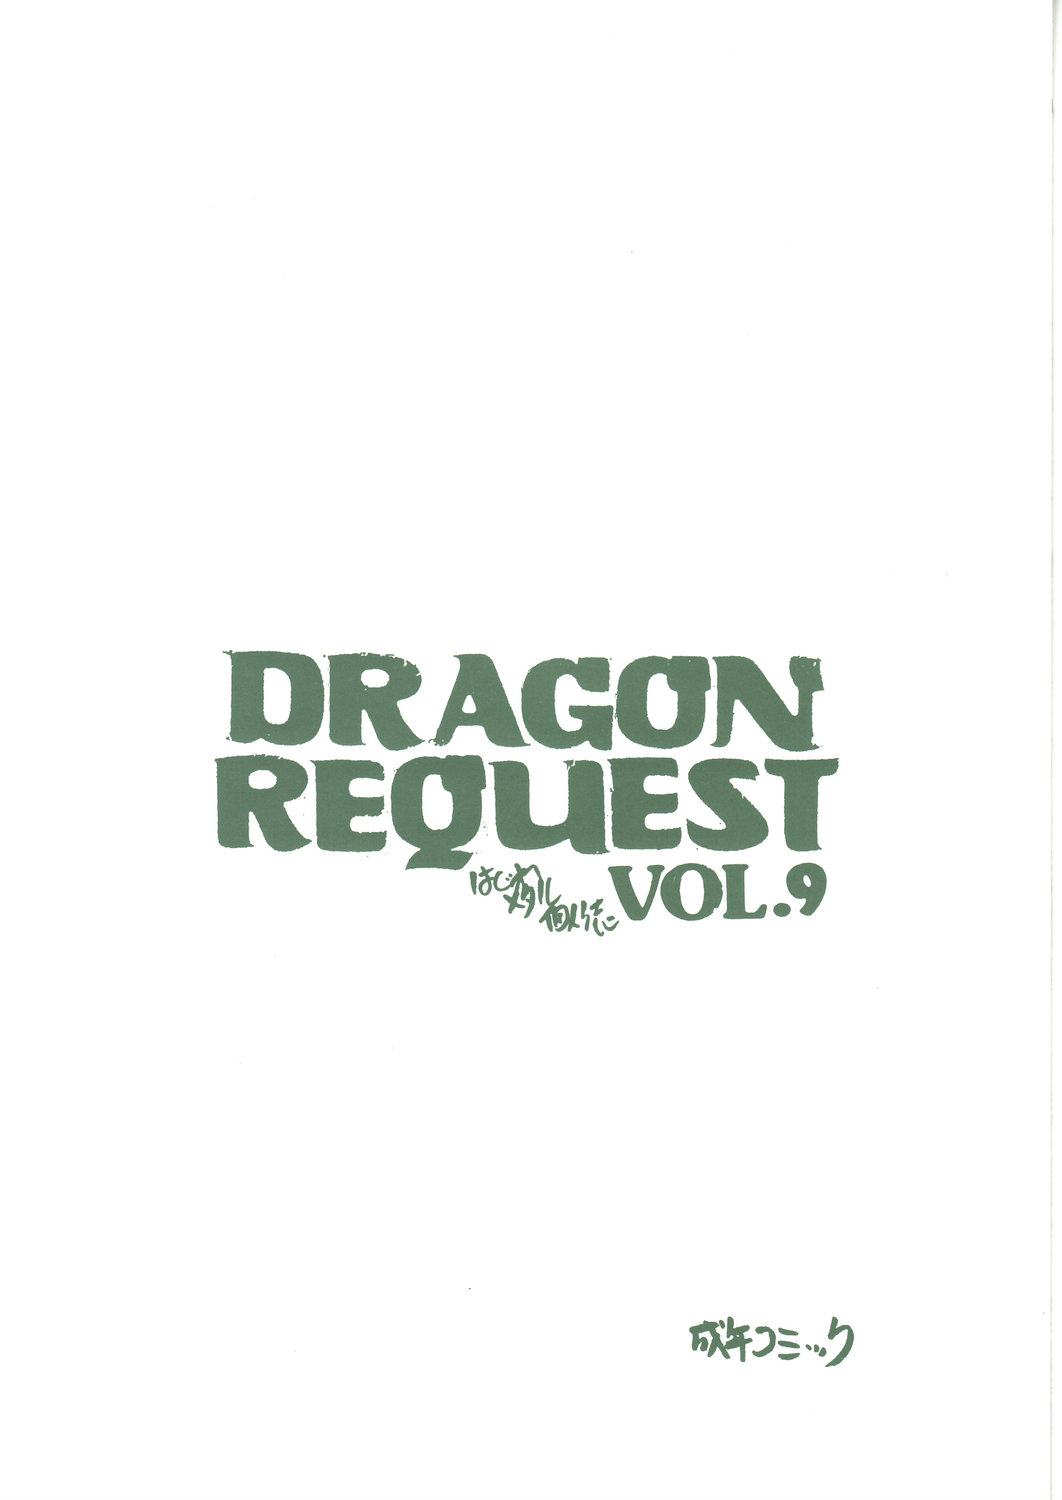 [Jinjin] DRAGON REQUEST VOL.9 (Dragon Quest) 